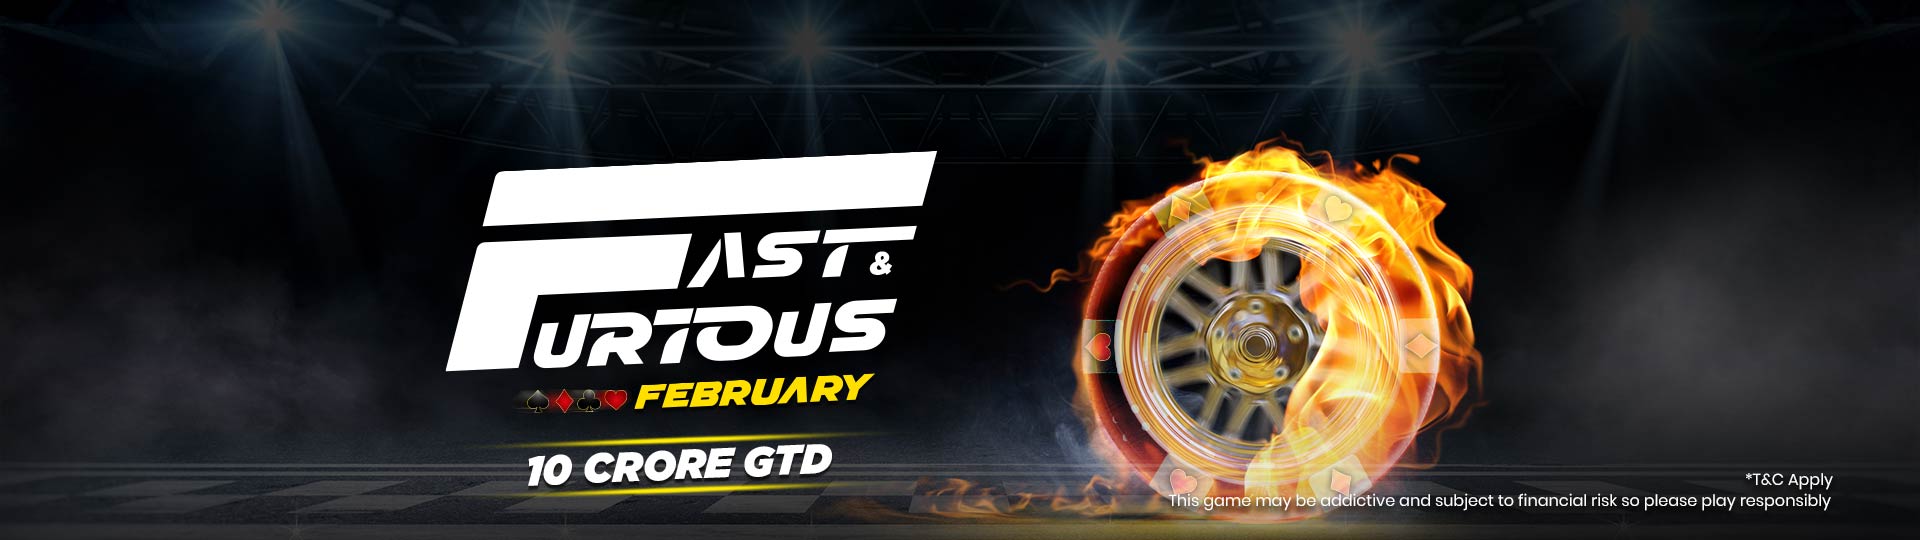 Fast & Furious February